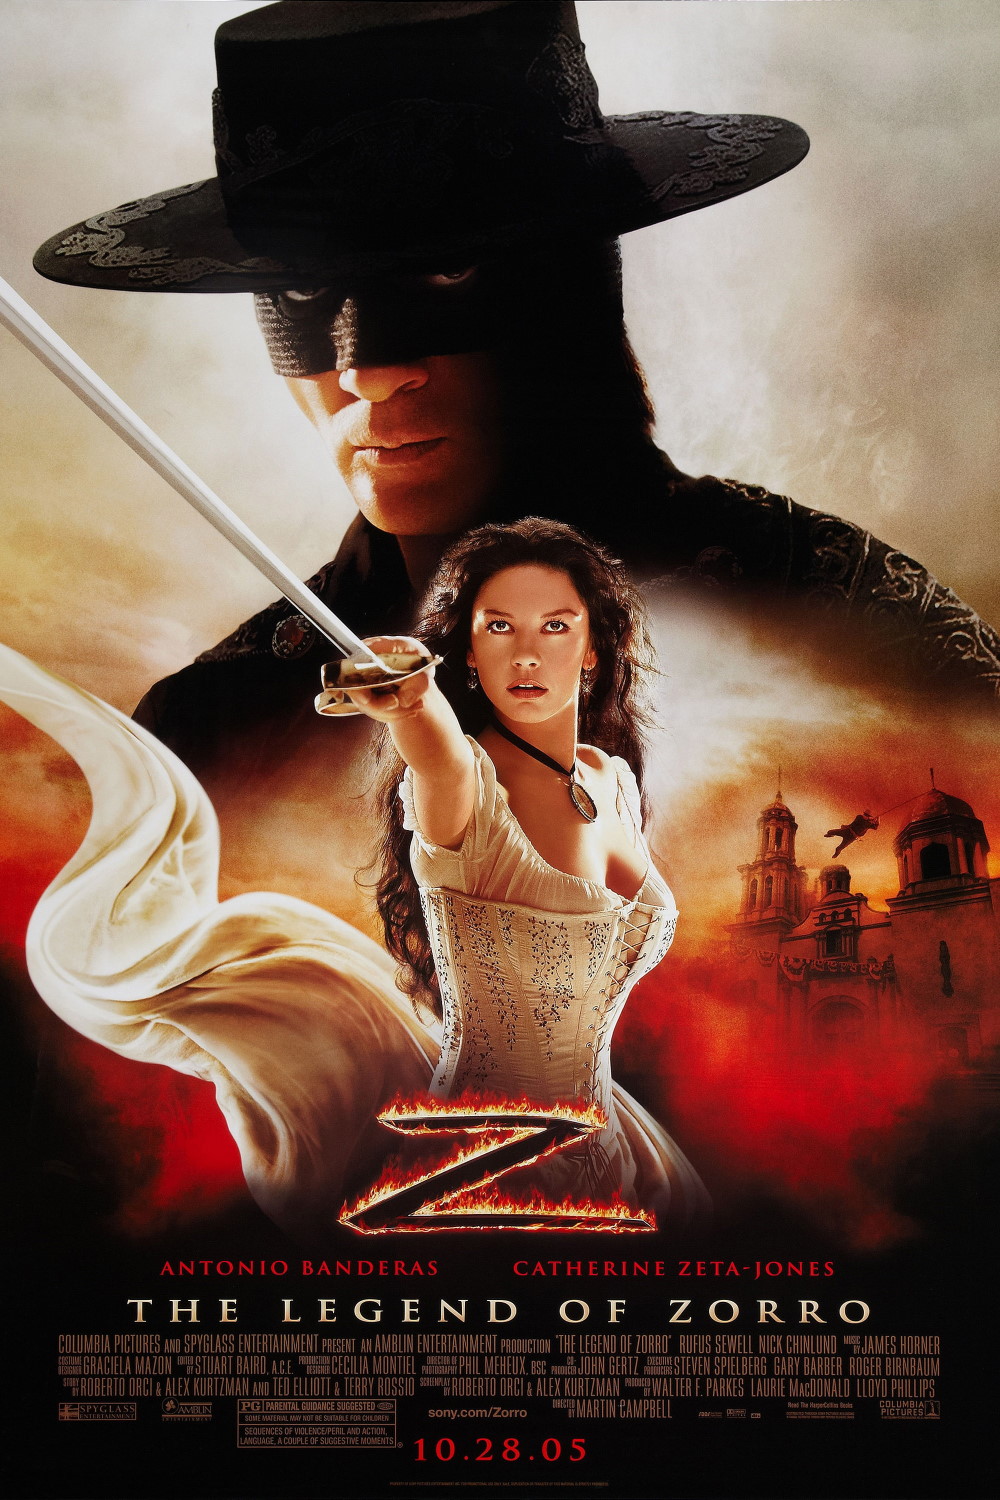 The Legend of Zorro (2005) Poster